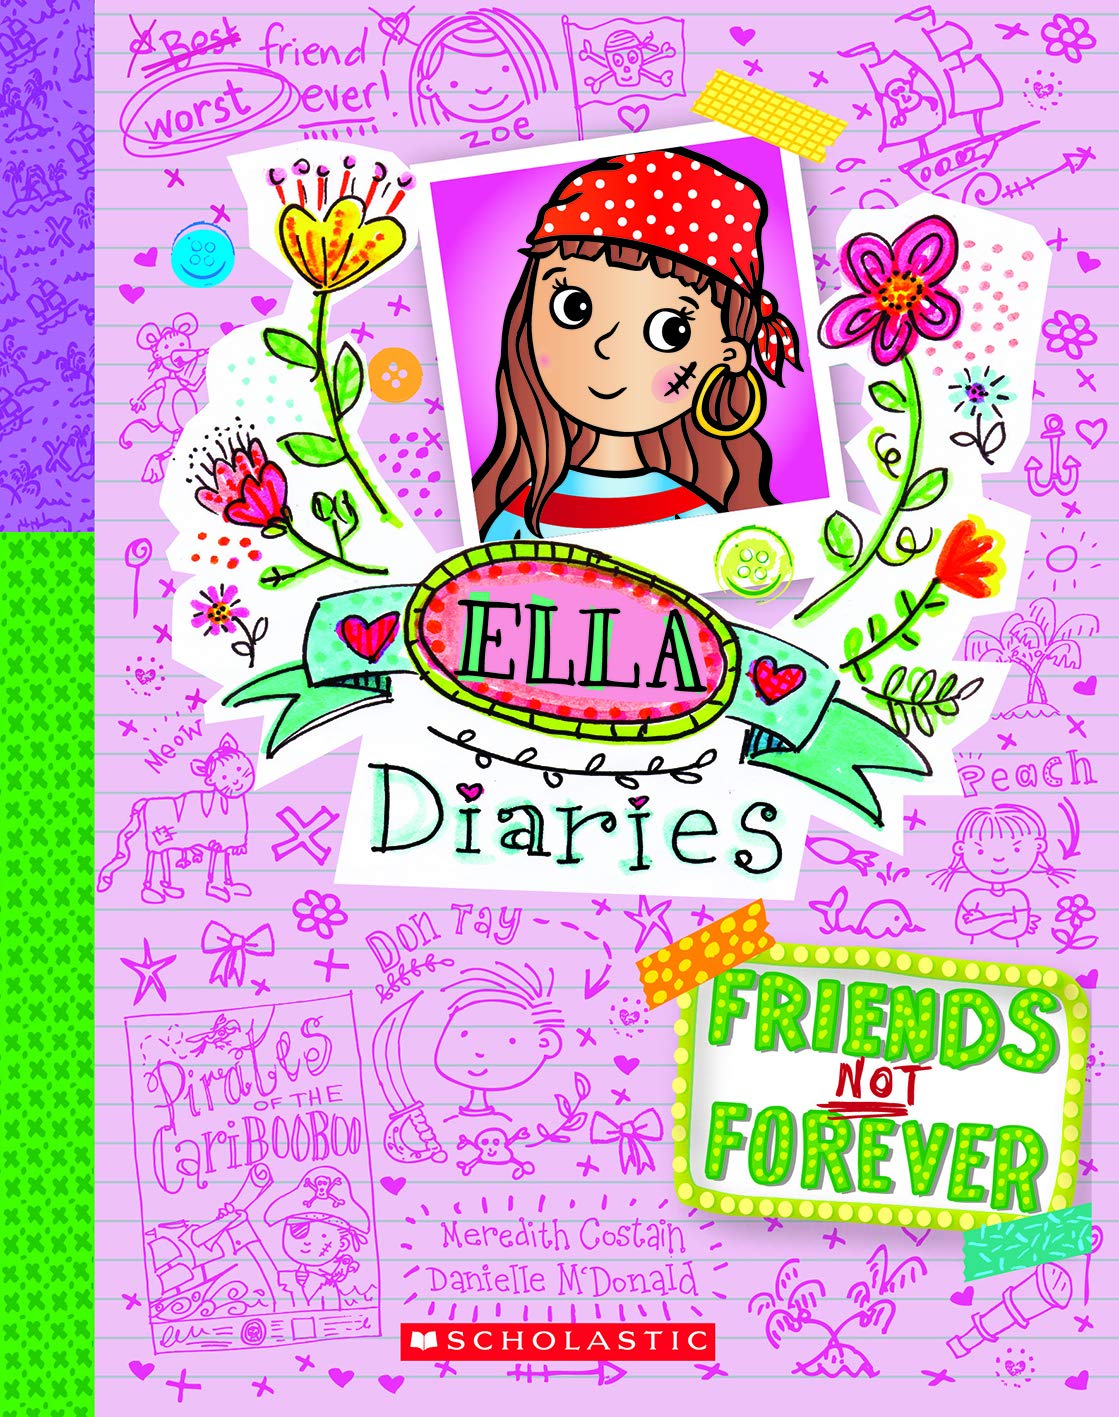 Ella Dairies #7: Friends Not Forever